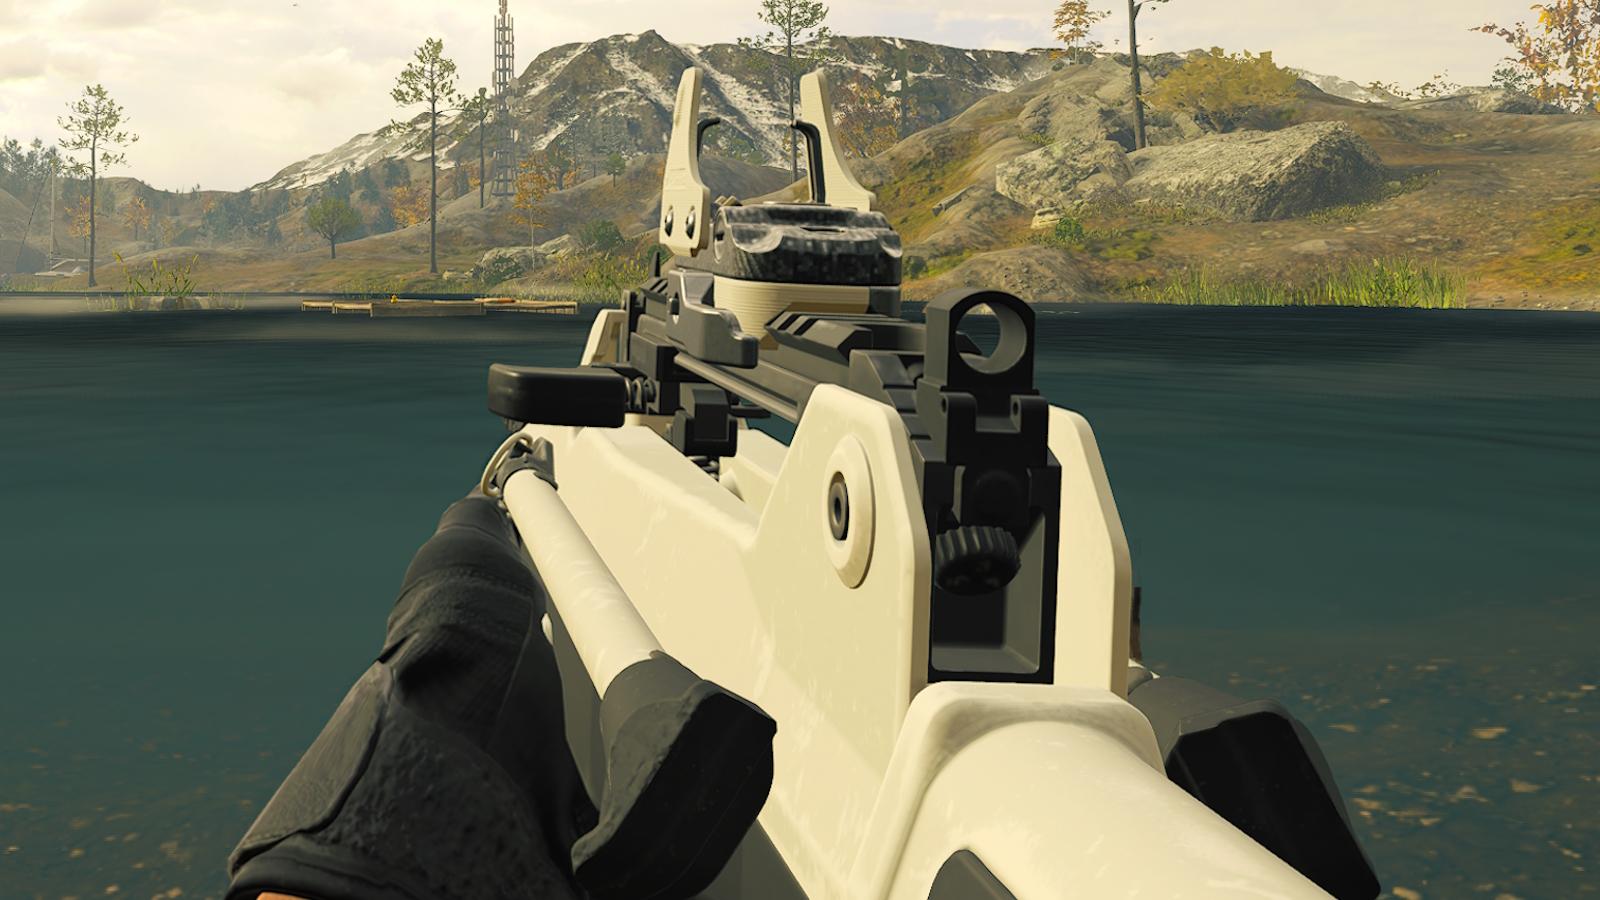 FR Avancer assault rifle in Modern Warfare 3.